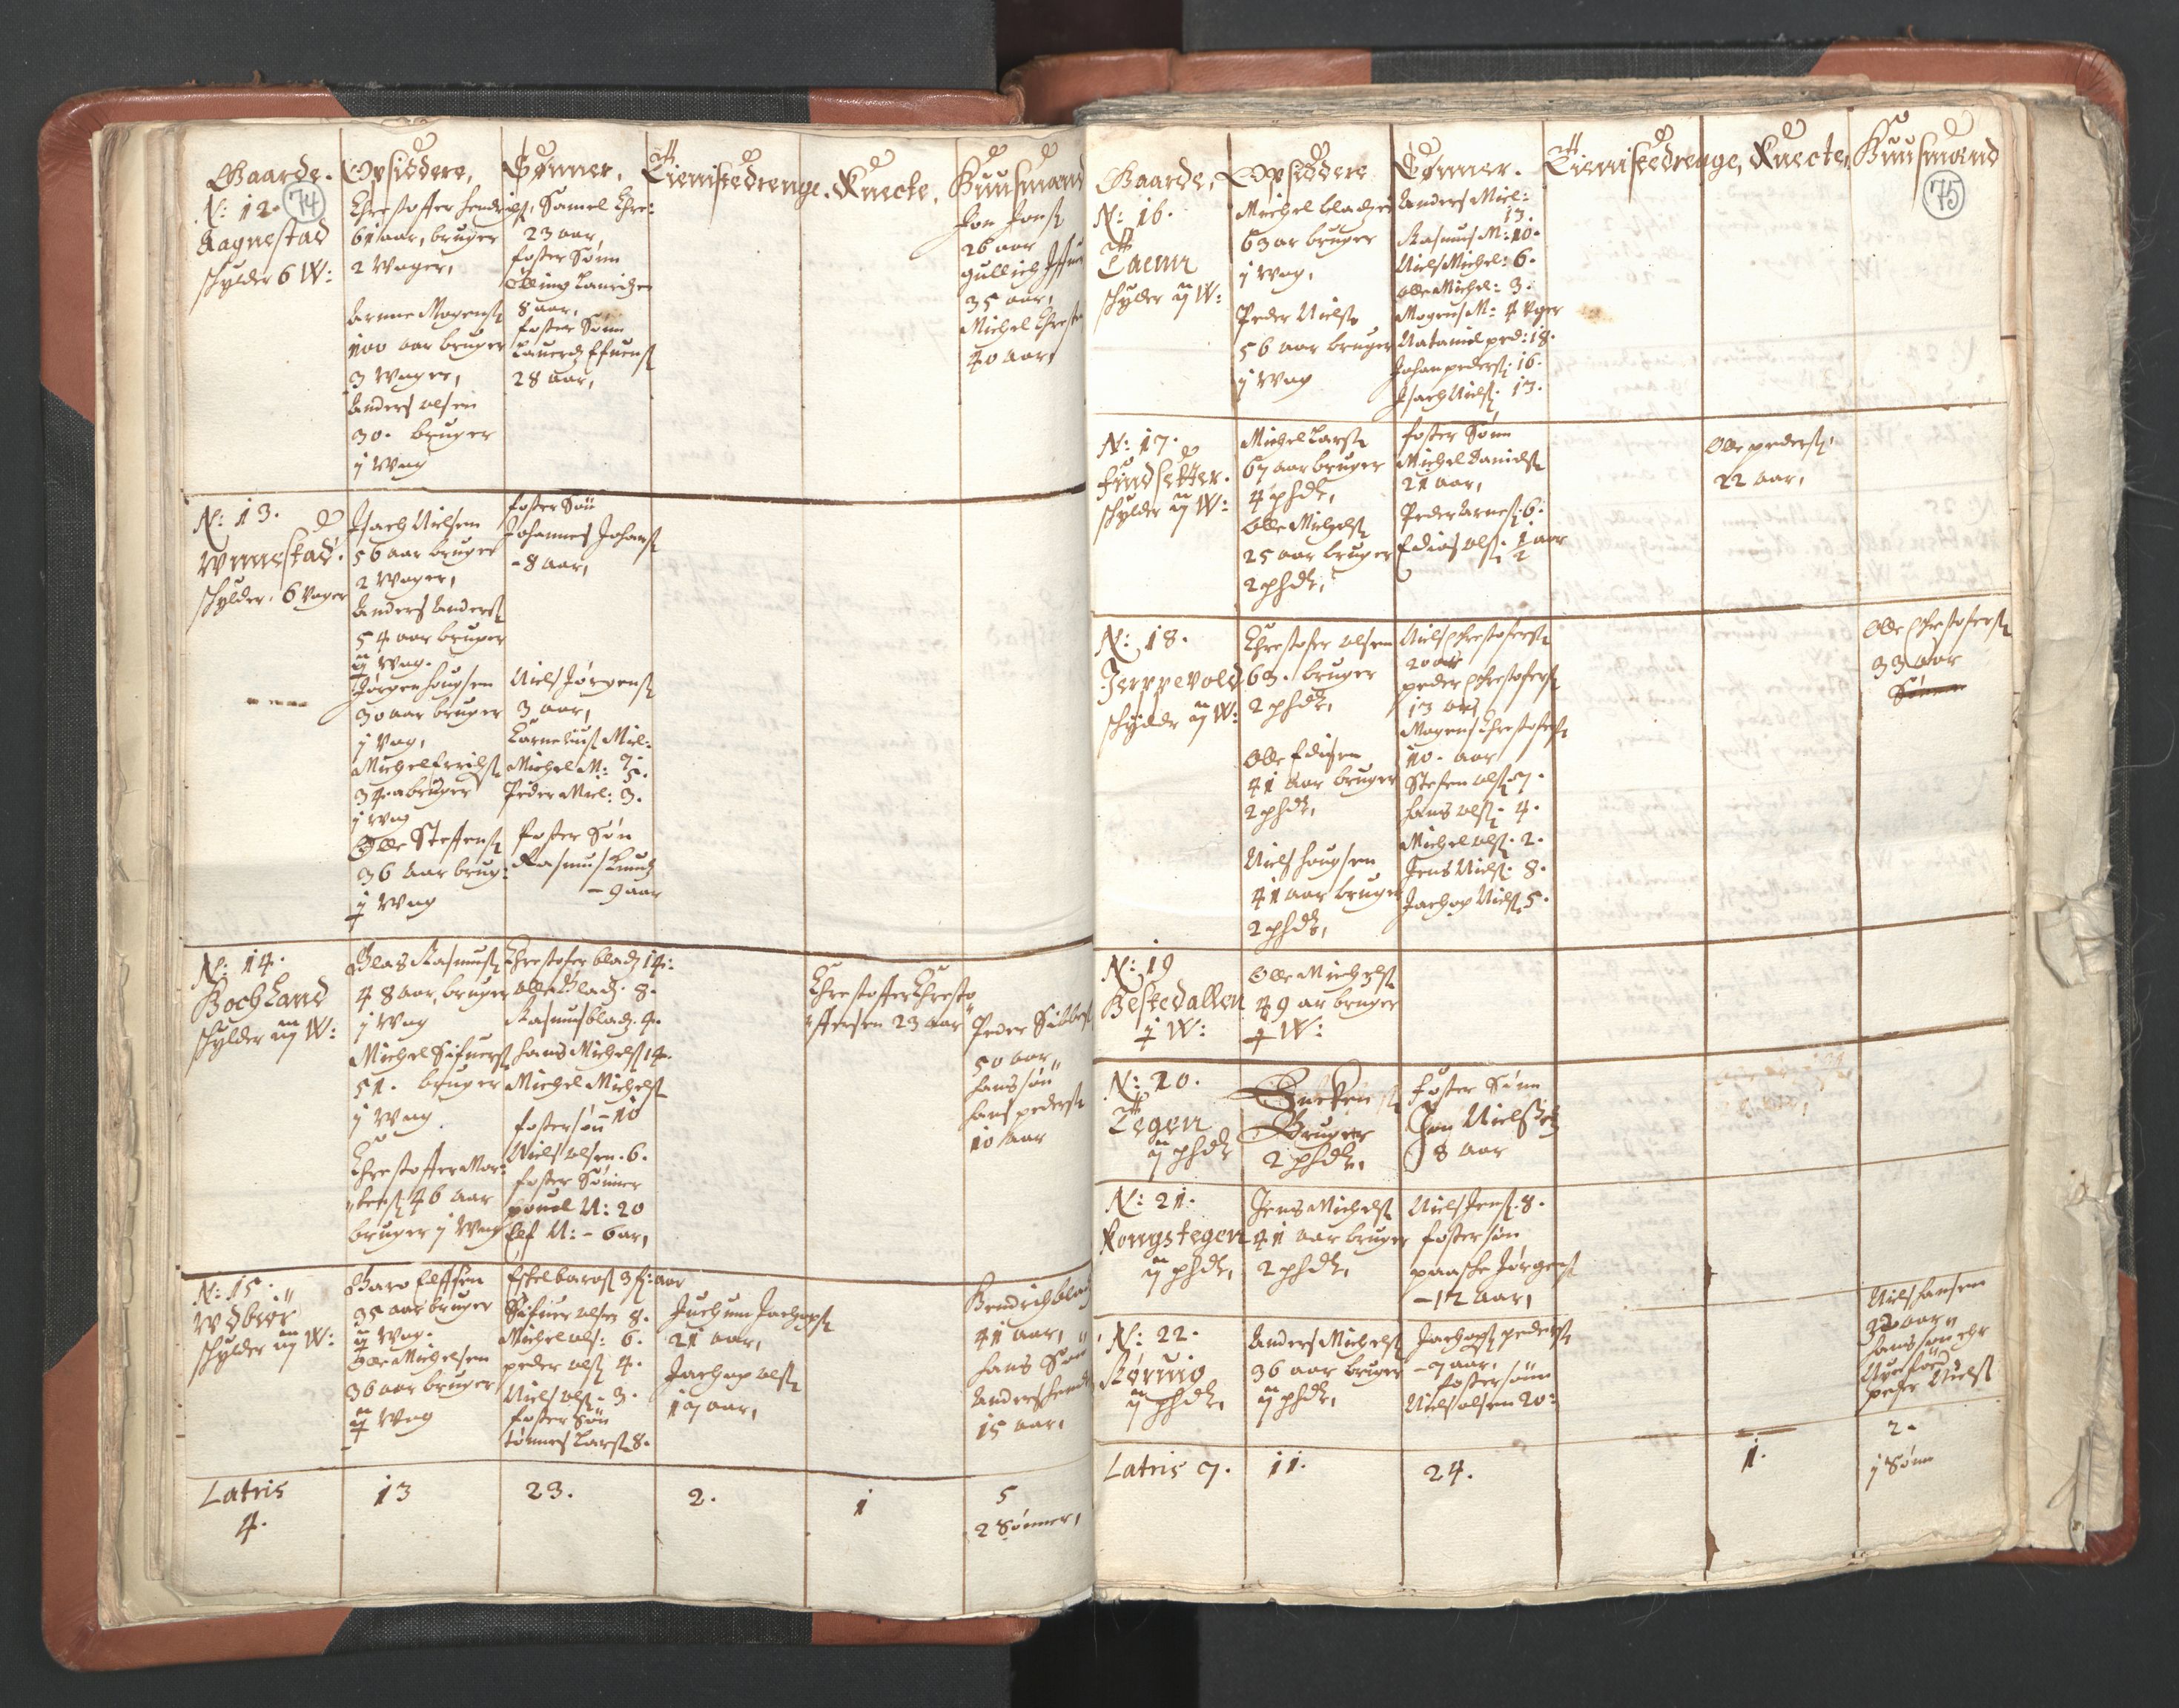 RA, Vicar's Census 1664-1666, no. 36: Lofoten and Vesterålen deanery, Senja deanery and Troms deanery, 1664-1666, p. 74-75